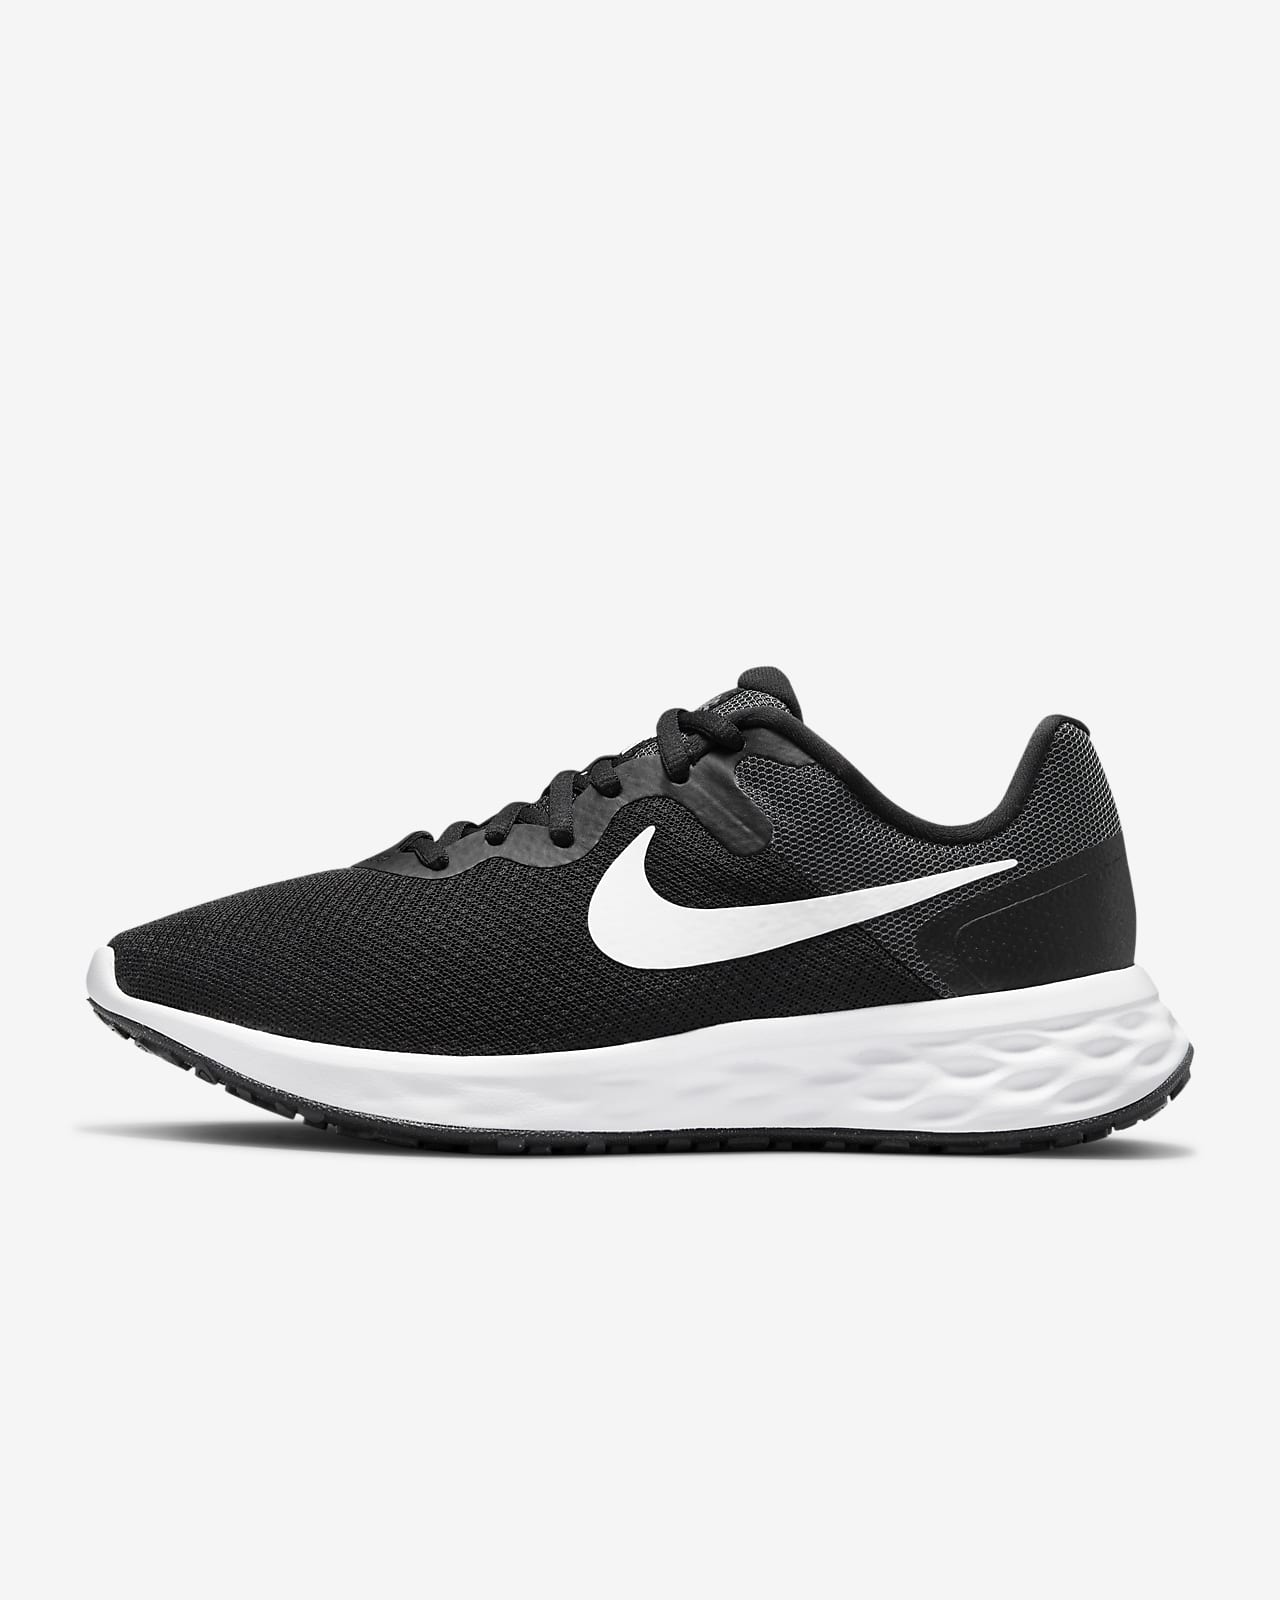 Women's Running Shoes - Run Comfort Dark Grey - Carbon grey